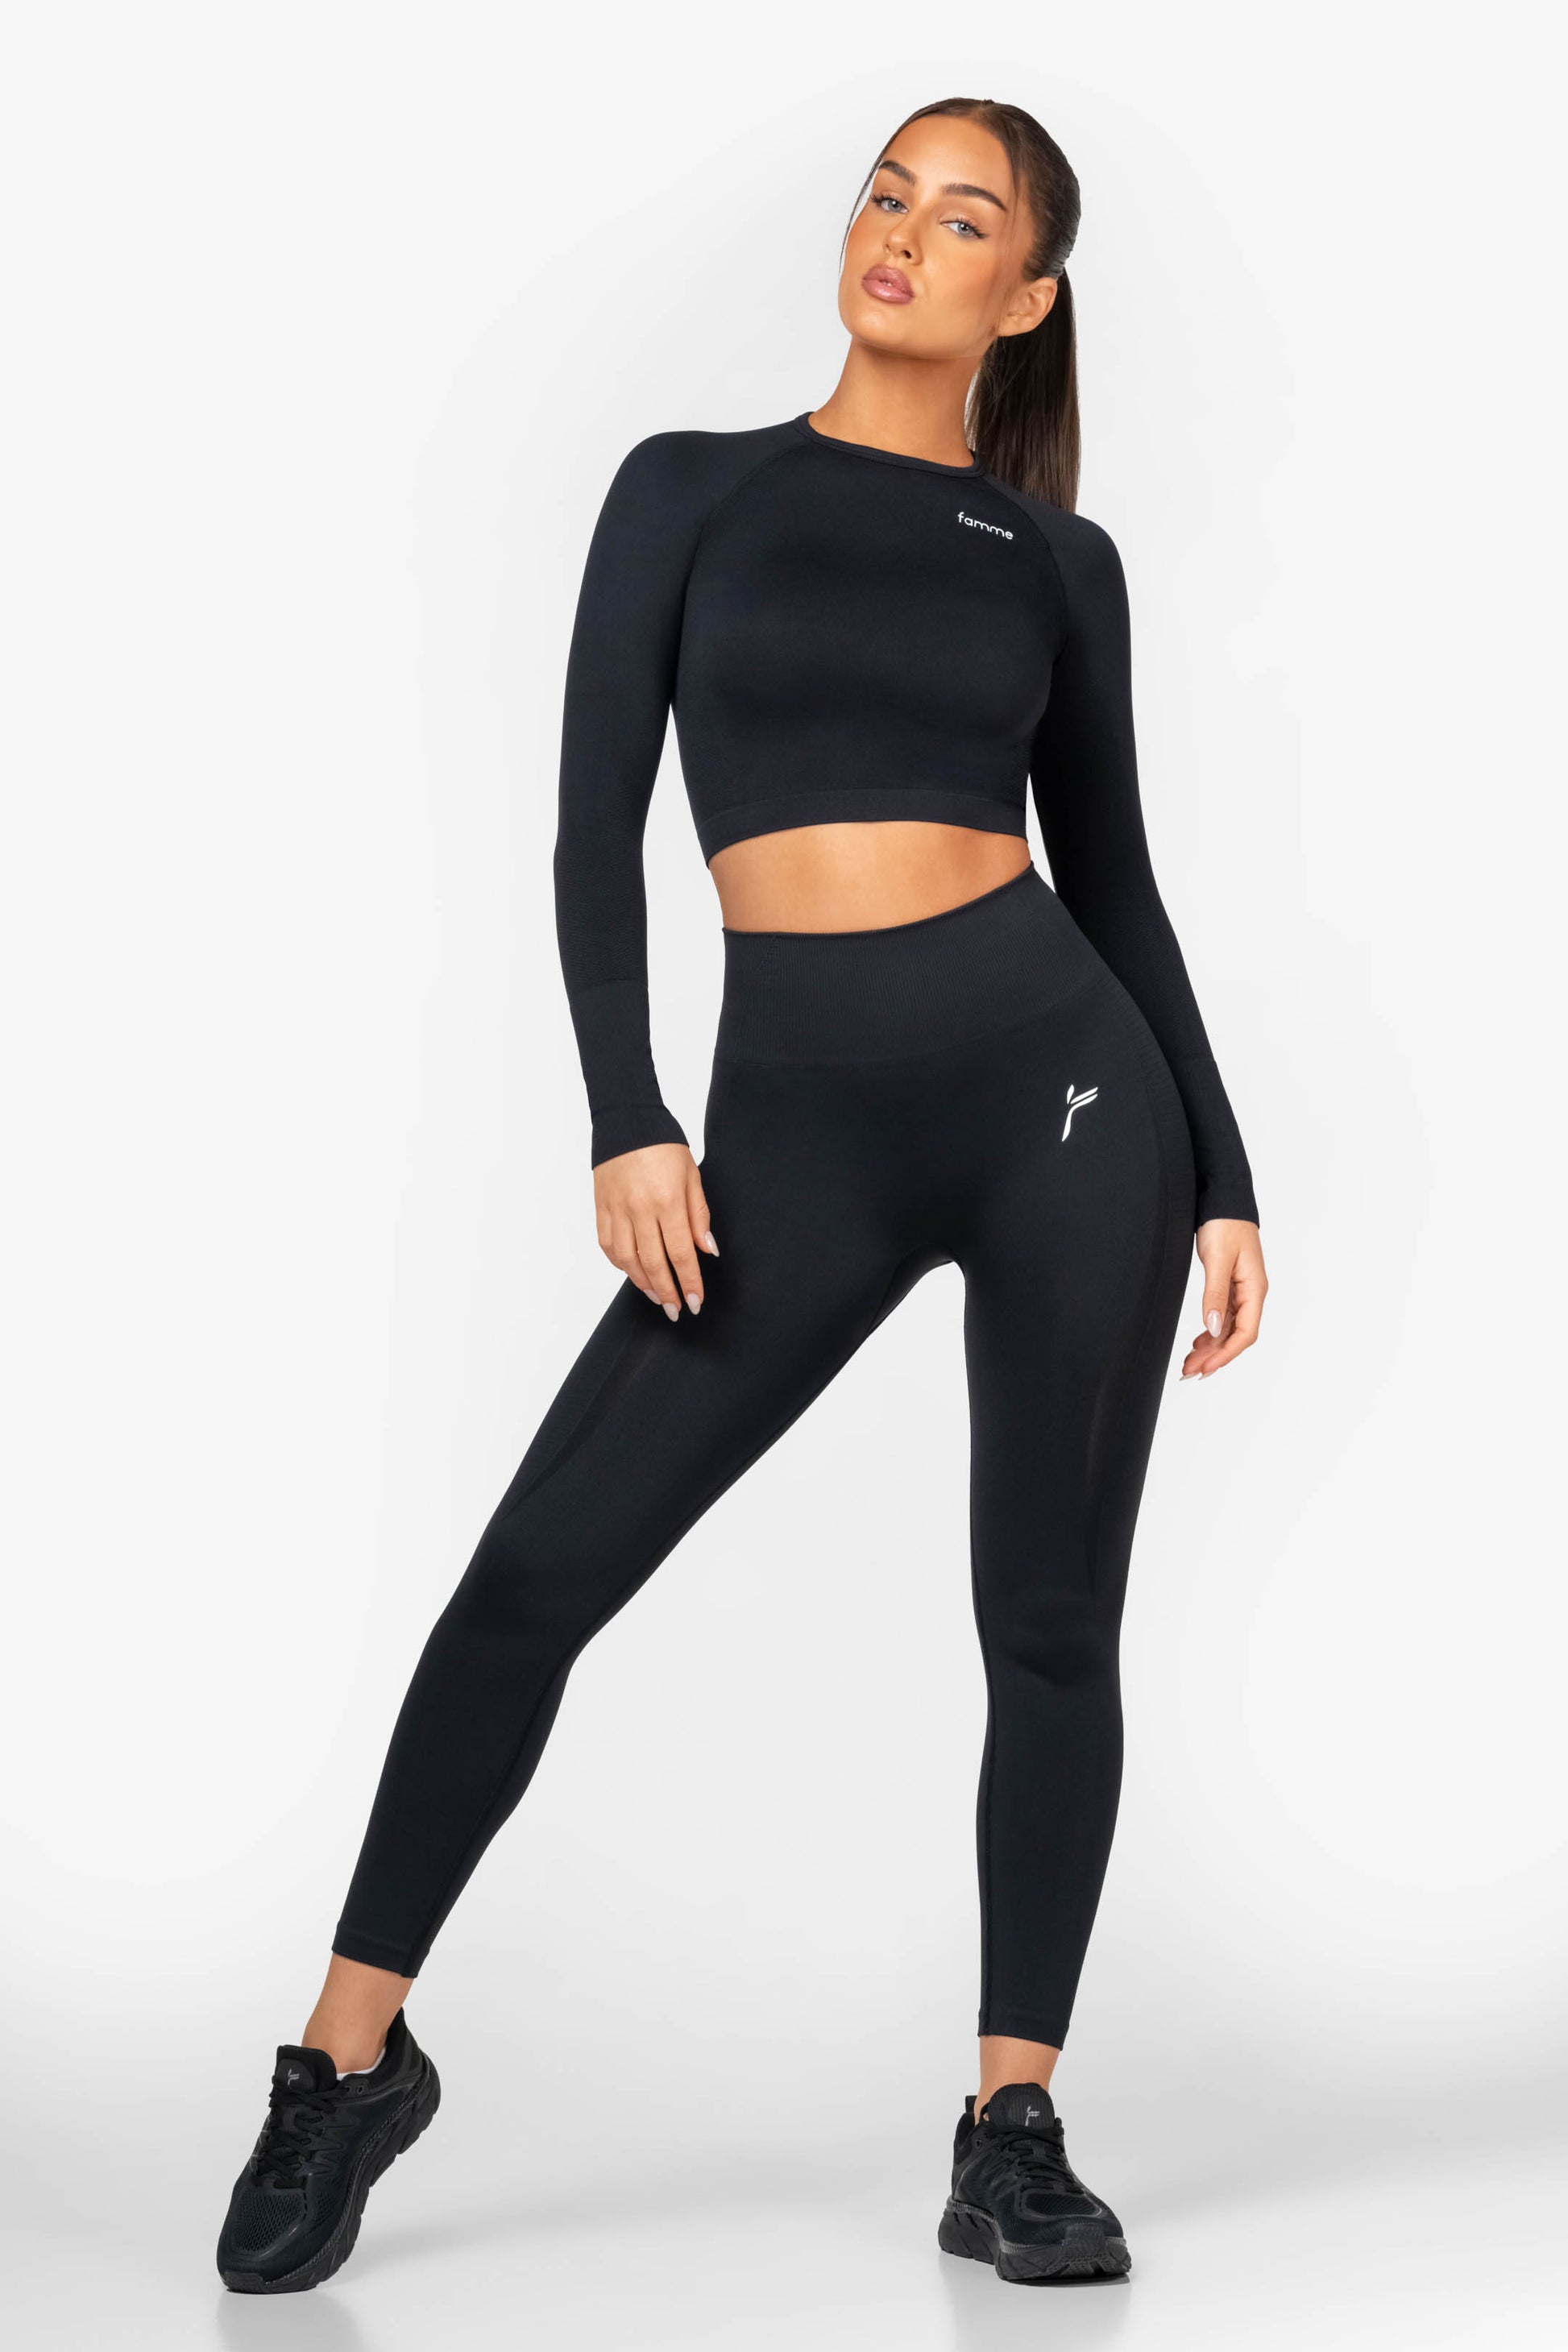 POP CLOSETS Women's High Waist Workout Vital Seamless Leggings Butt Lift  Yoga Pants Stretchy Fitness Gym Tights 